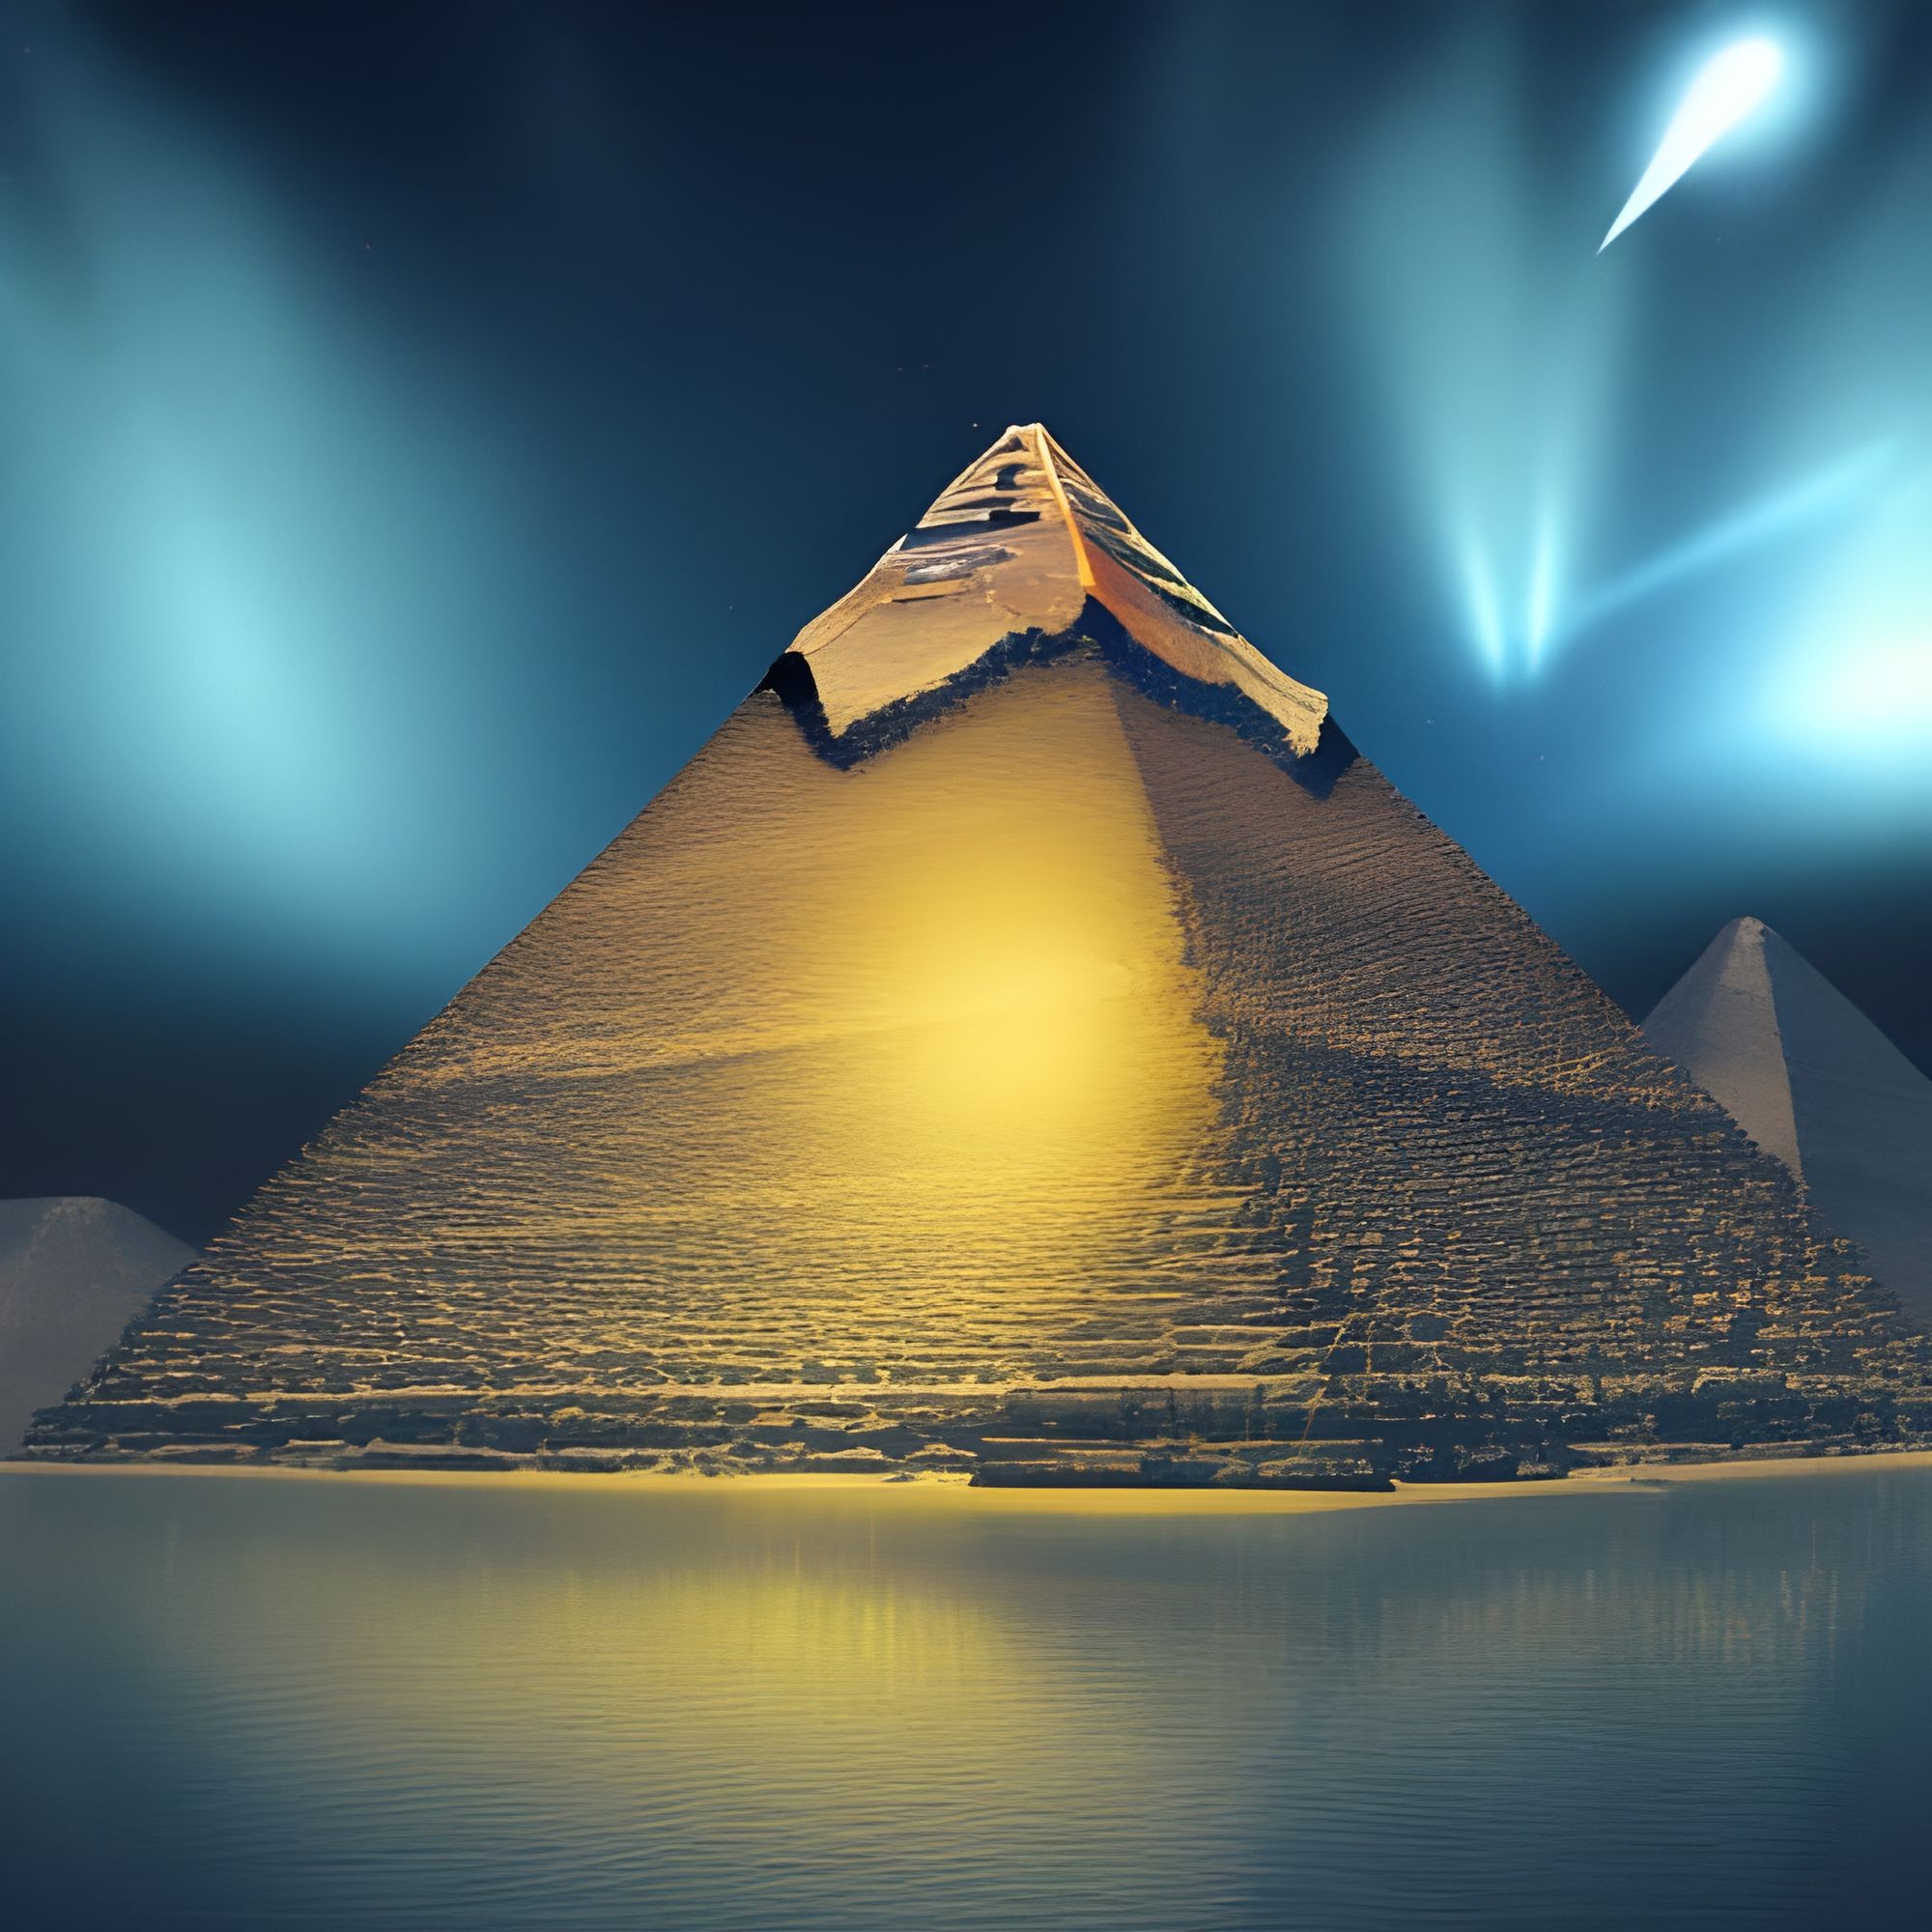 Premium Photo | Great pyramids HD 8K wallpaper Stock Photographic Image